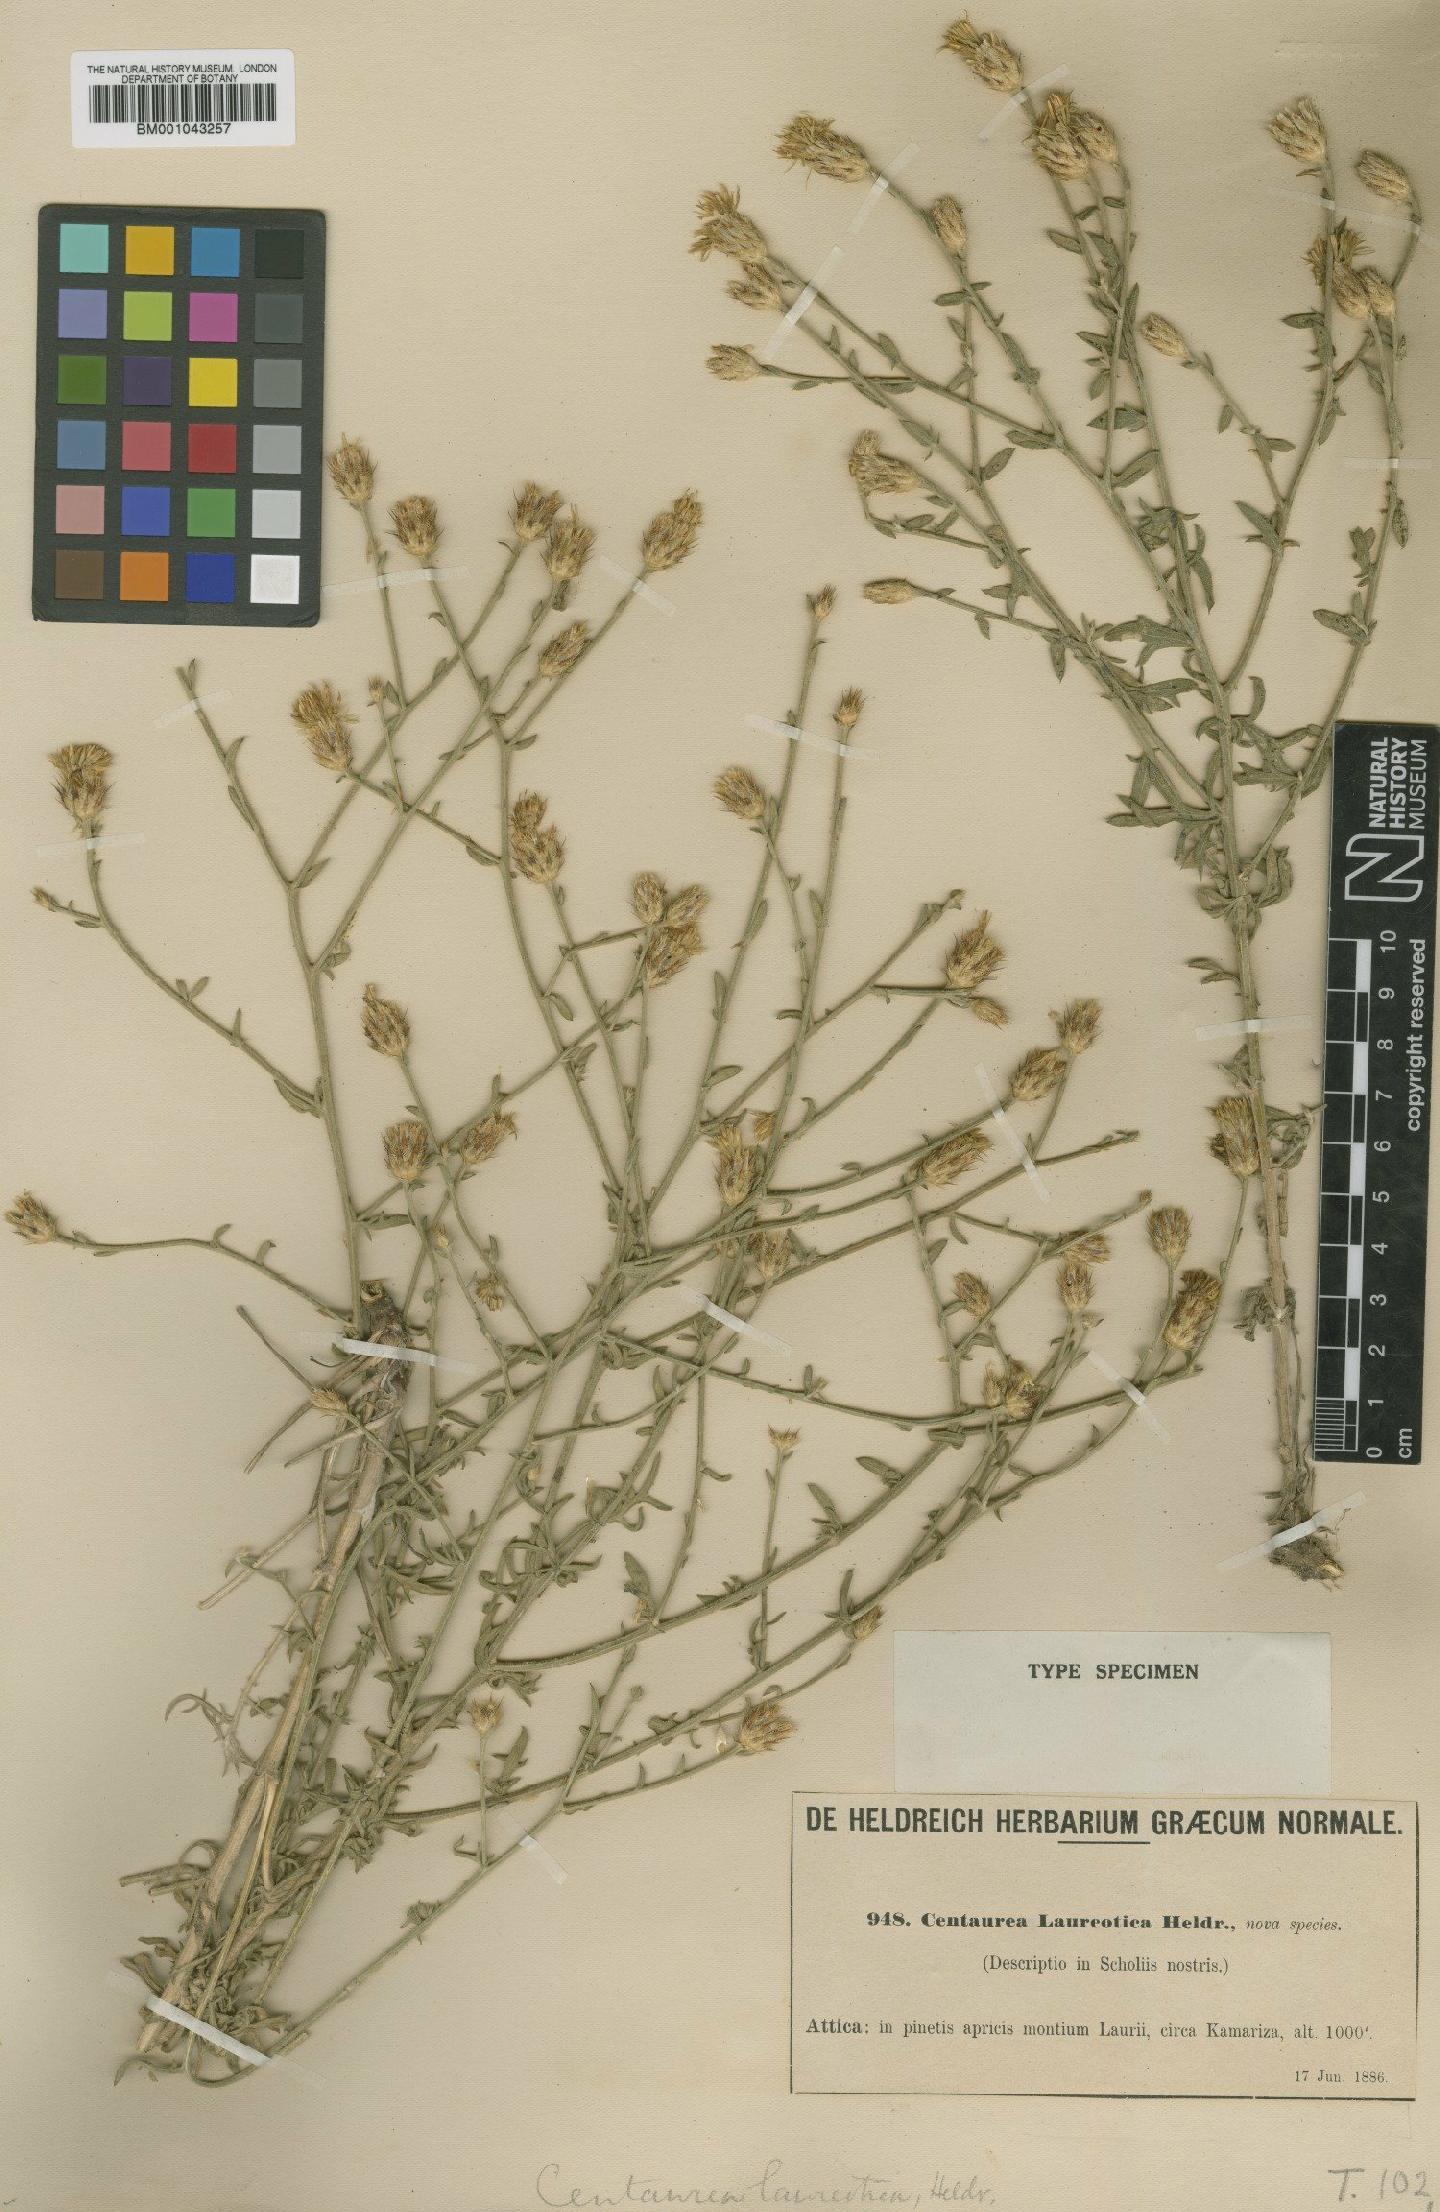 To NHMUK collection (Centaurea laureotica Heldr.; Type; NHMUK:ecatalogue:1989063)